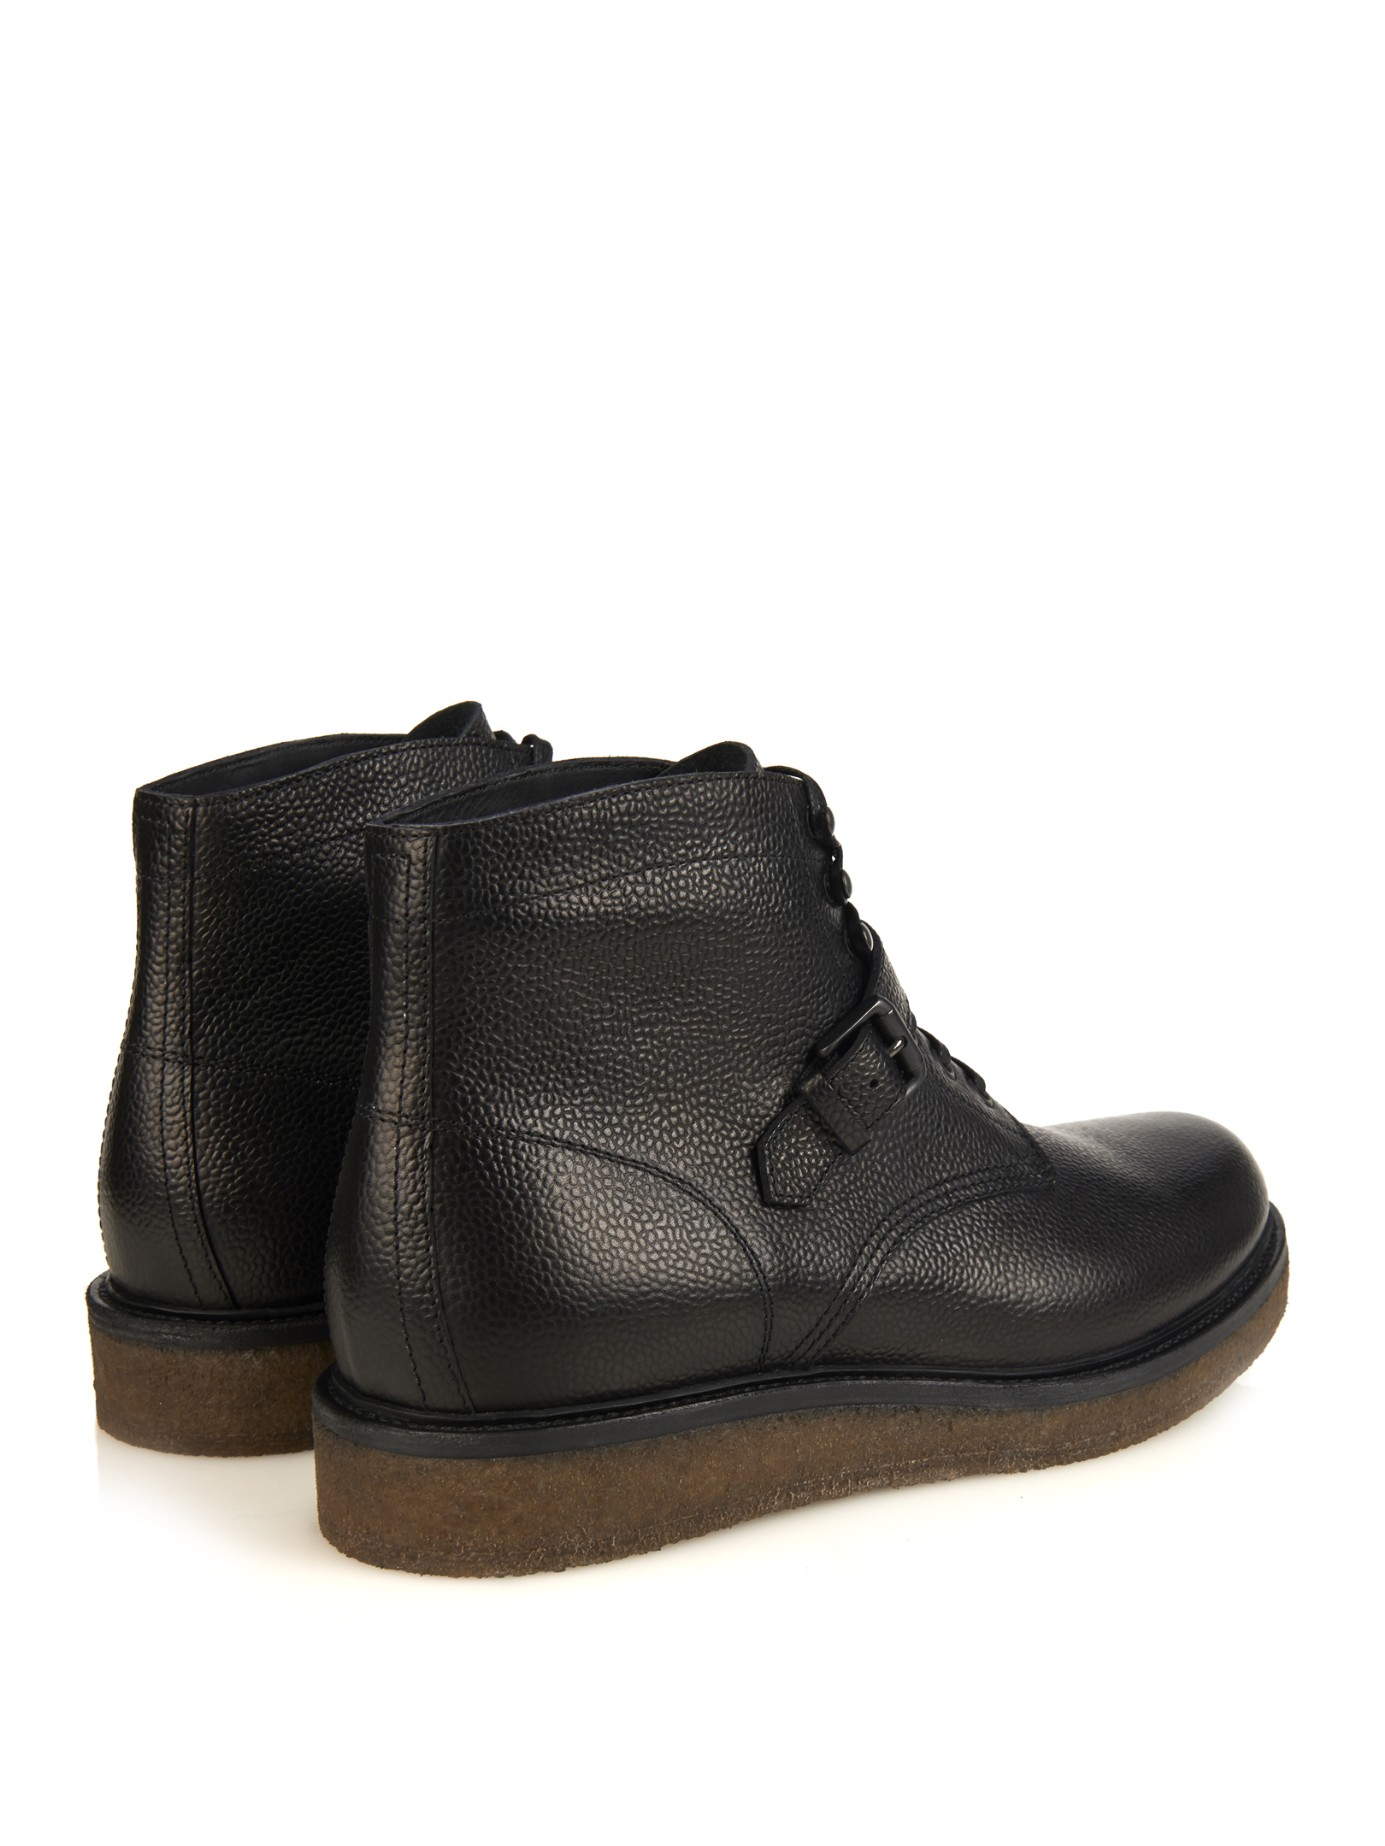 Lyst - Bottega Veneta Lace-Up Calfskin Ankle Boots in Black for Men